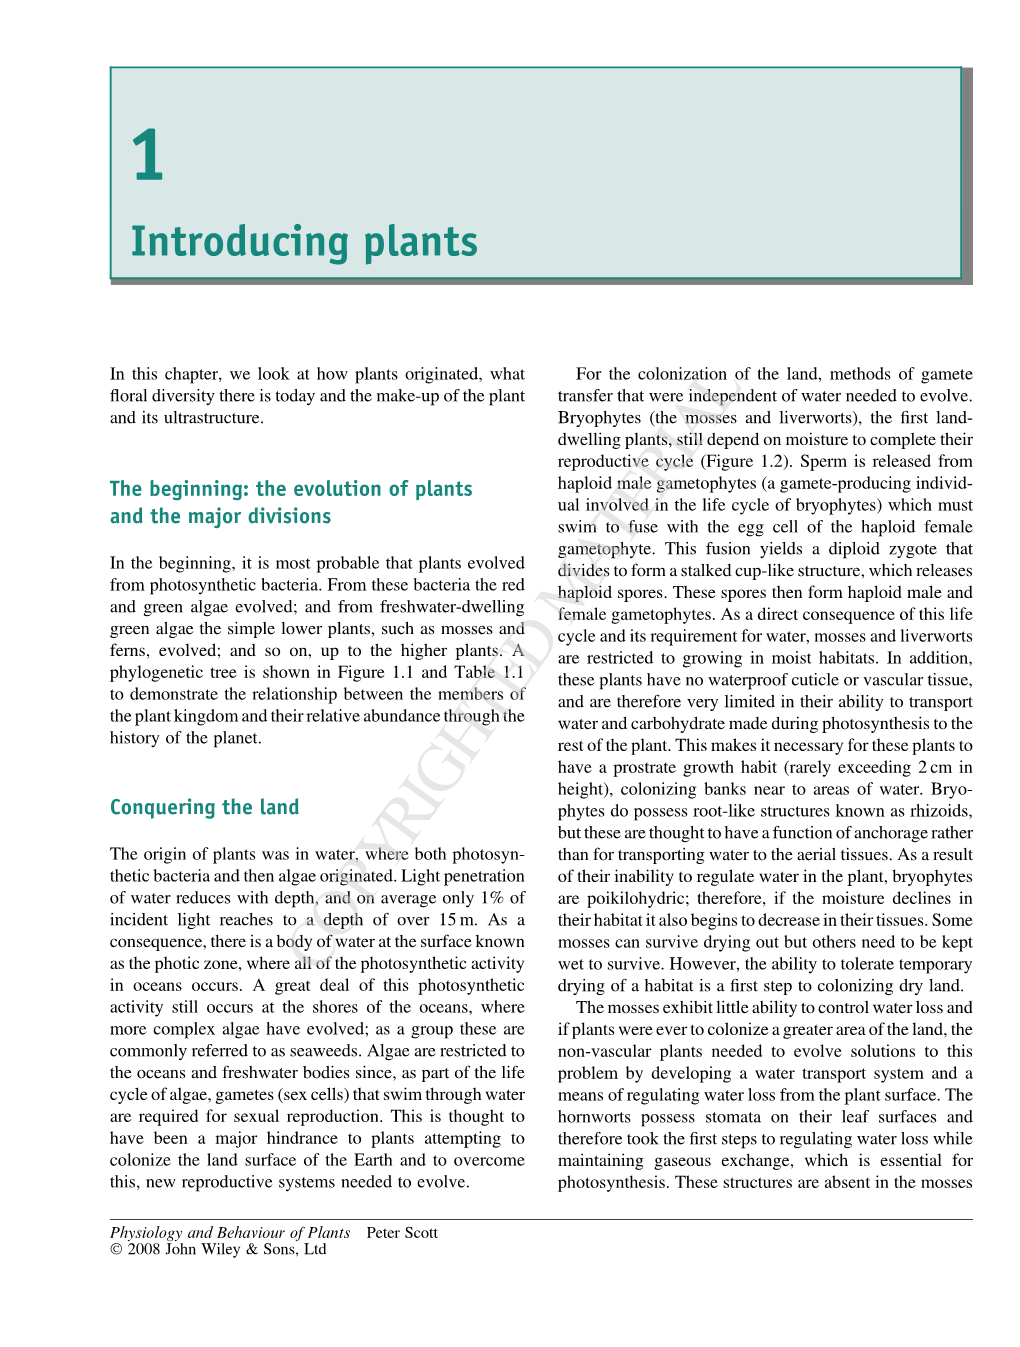 Introducing Plants